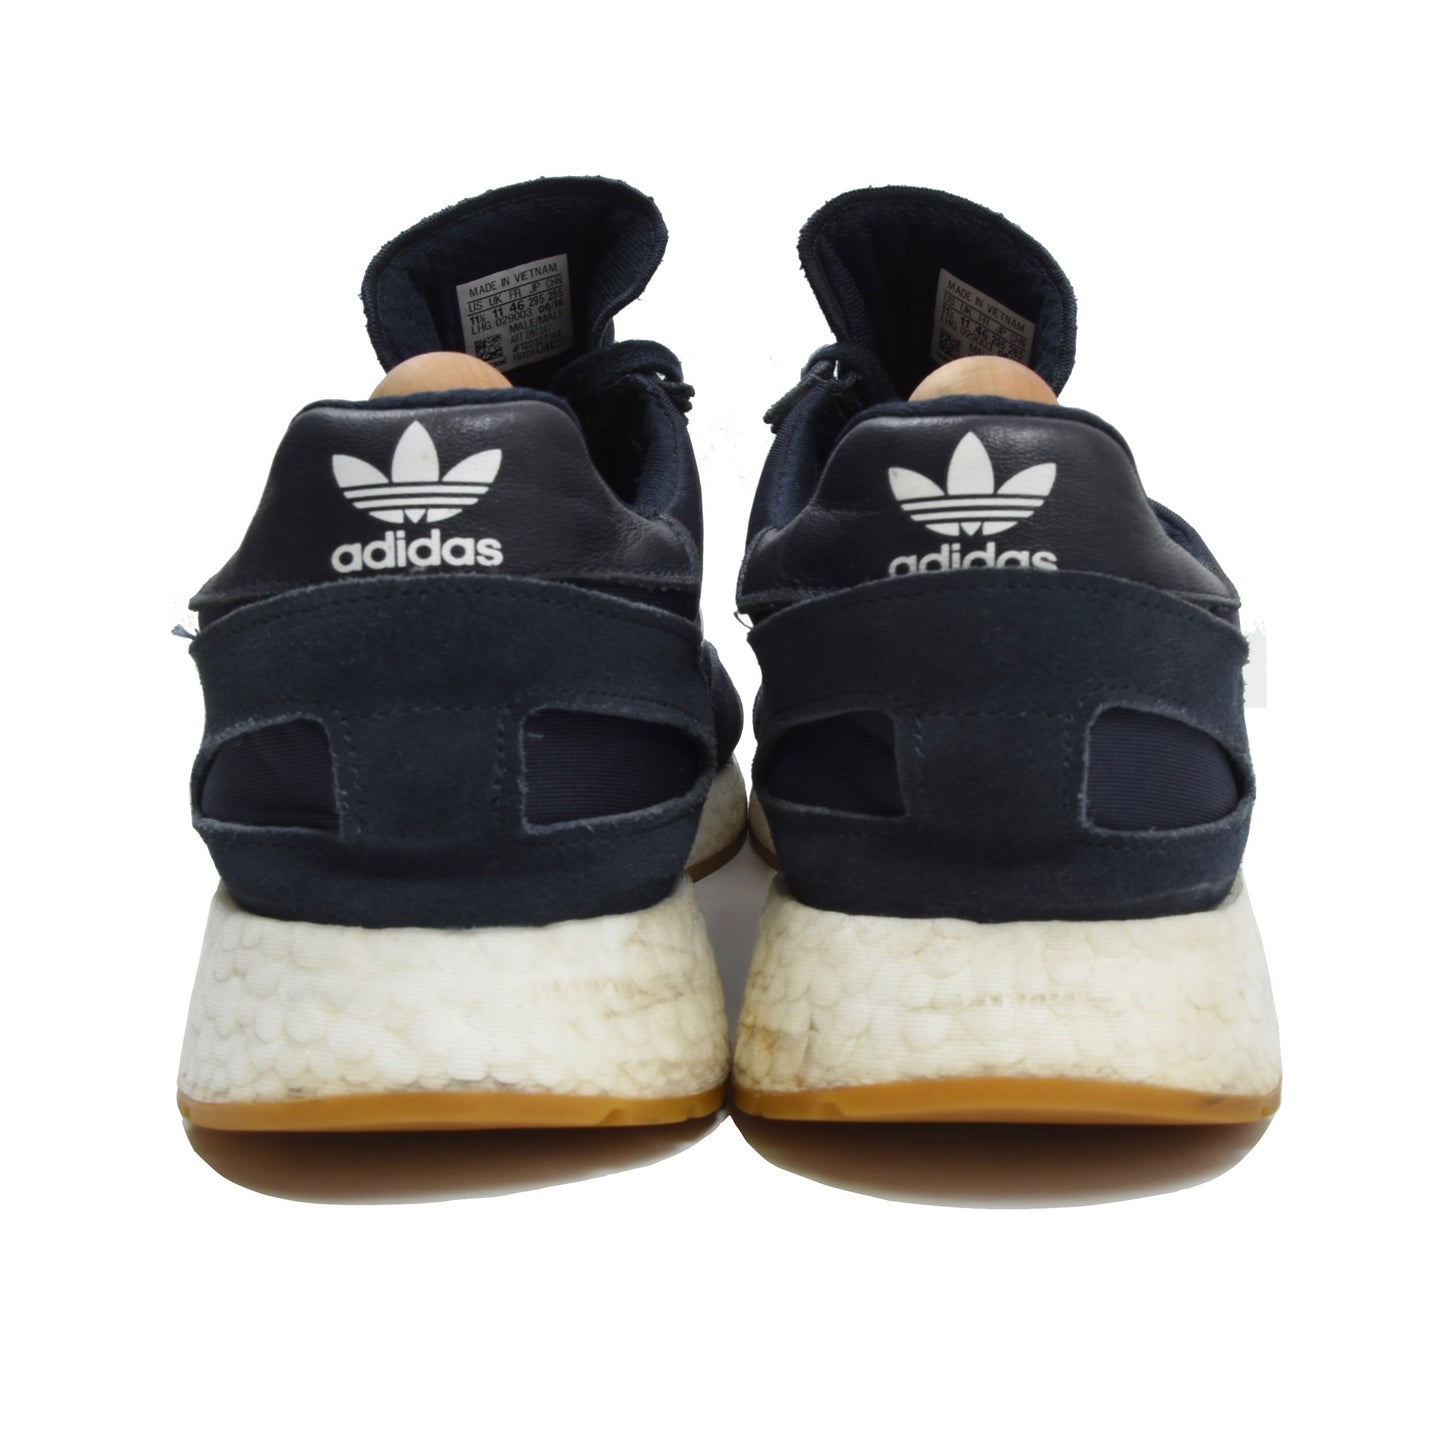 Adidas I-5923 Sneakers Size FR 46 US 11.5 UK 11 - Navy Blue